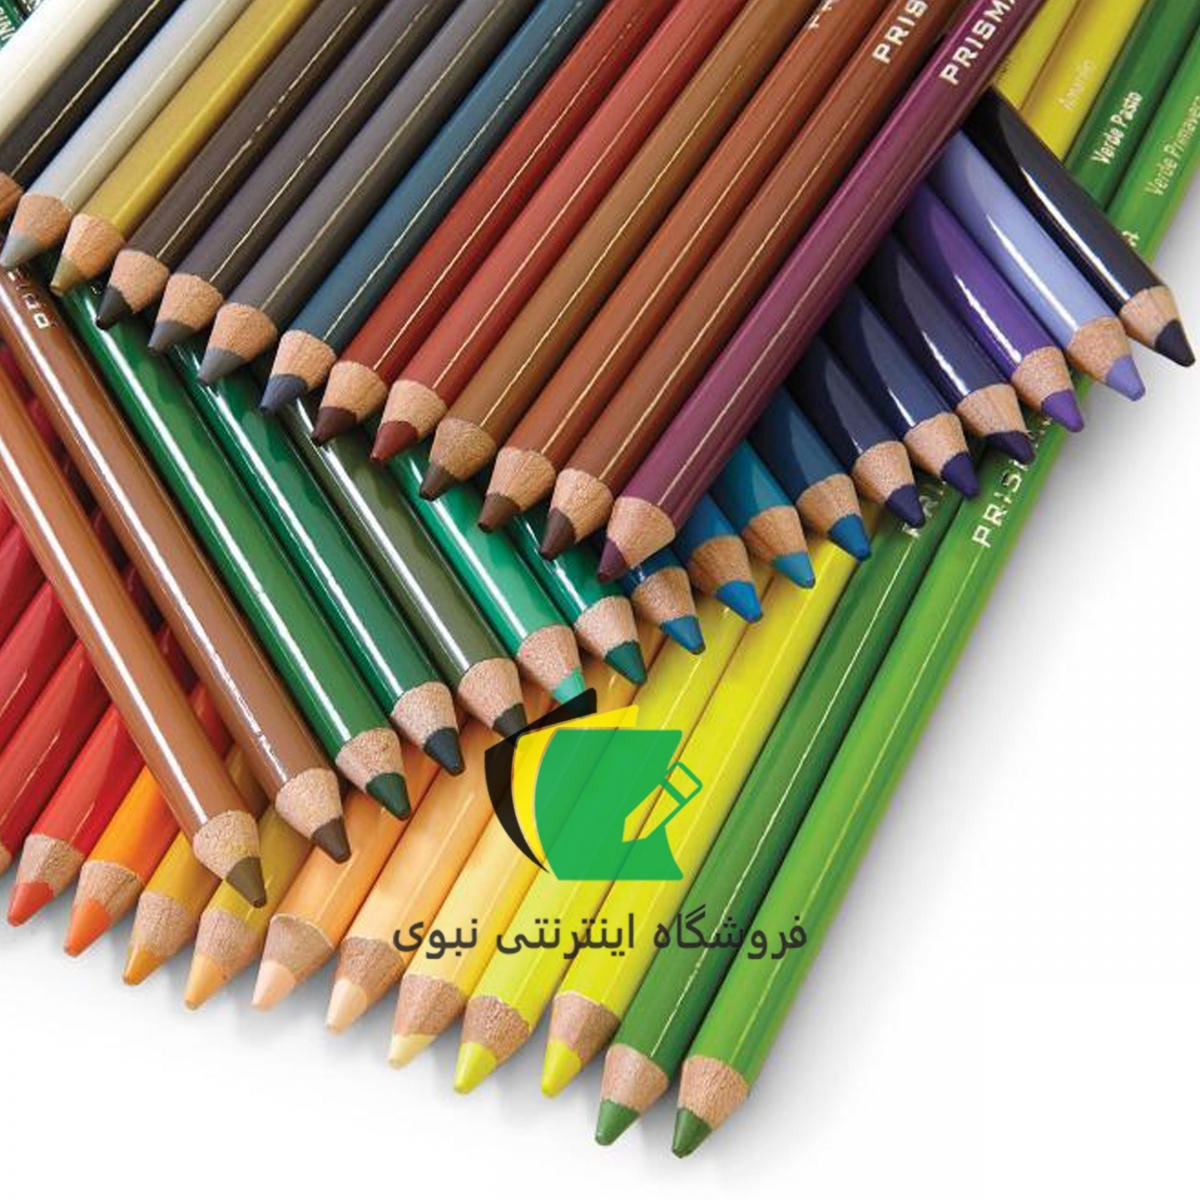 مداد رنگی 36 رنگ پریسماکالر مدل premier کد 3451